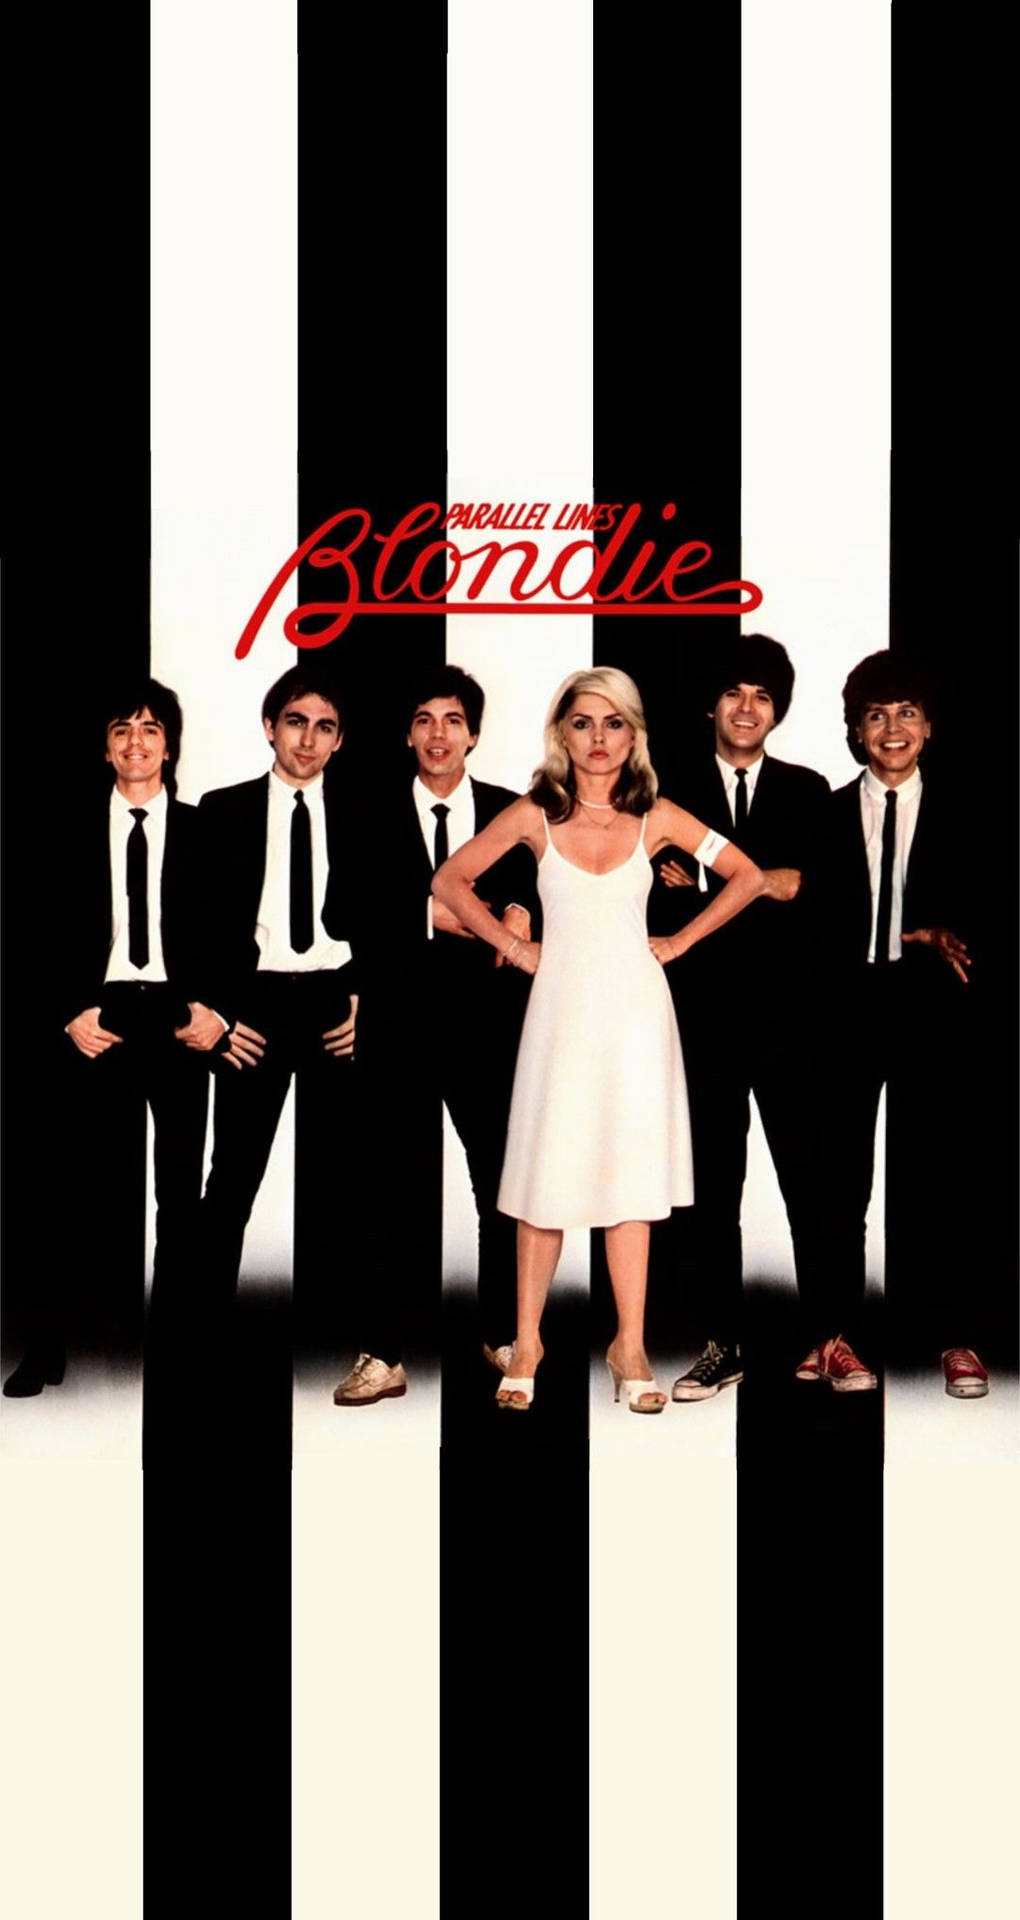 Blondie 1970s Band Parallel Lines Album Art Picture